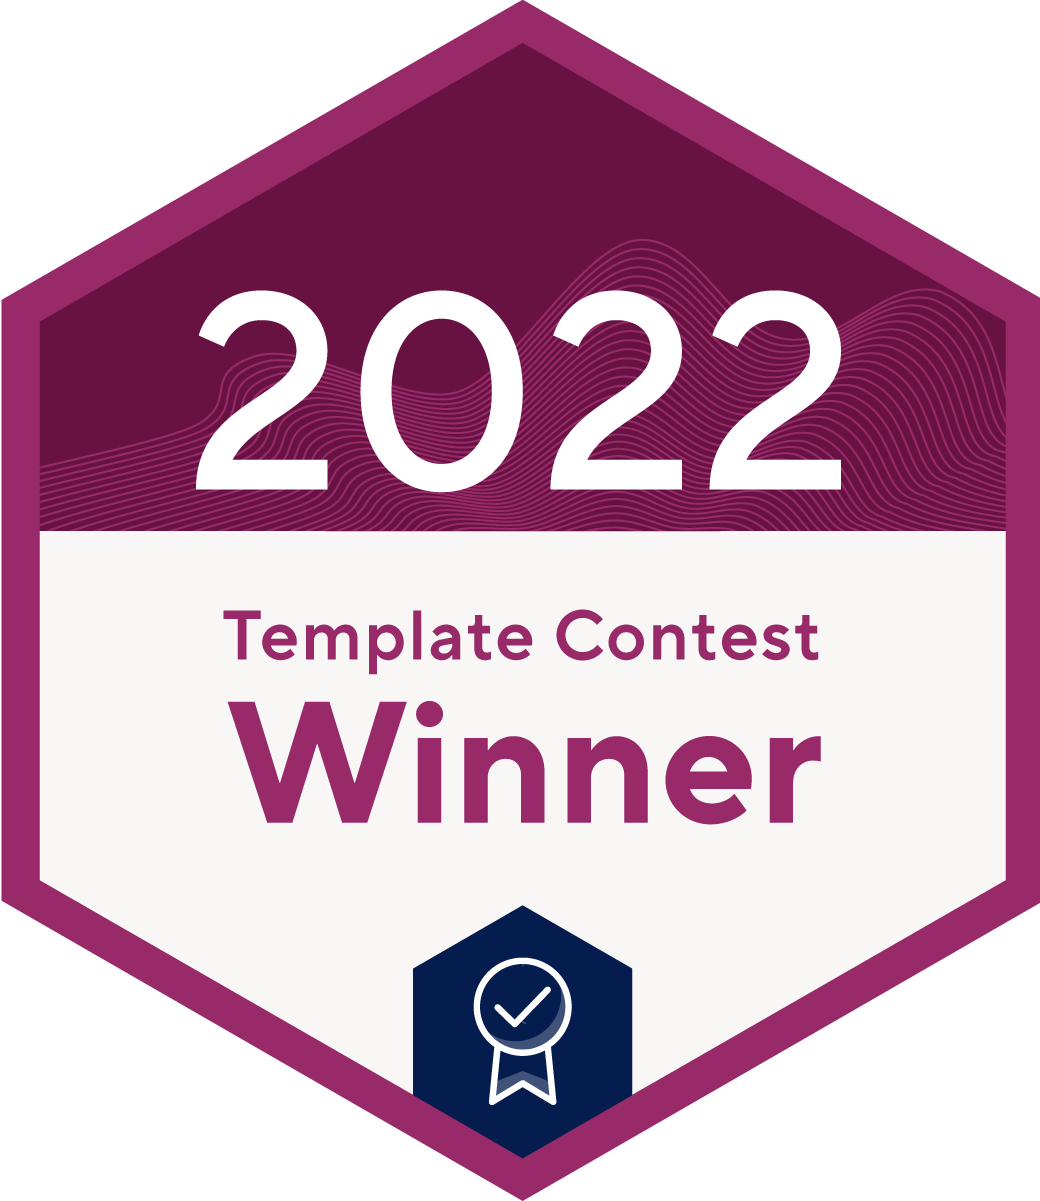 Community ENGAGE 2022 Template Contest Winner Badge